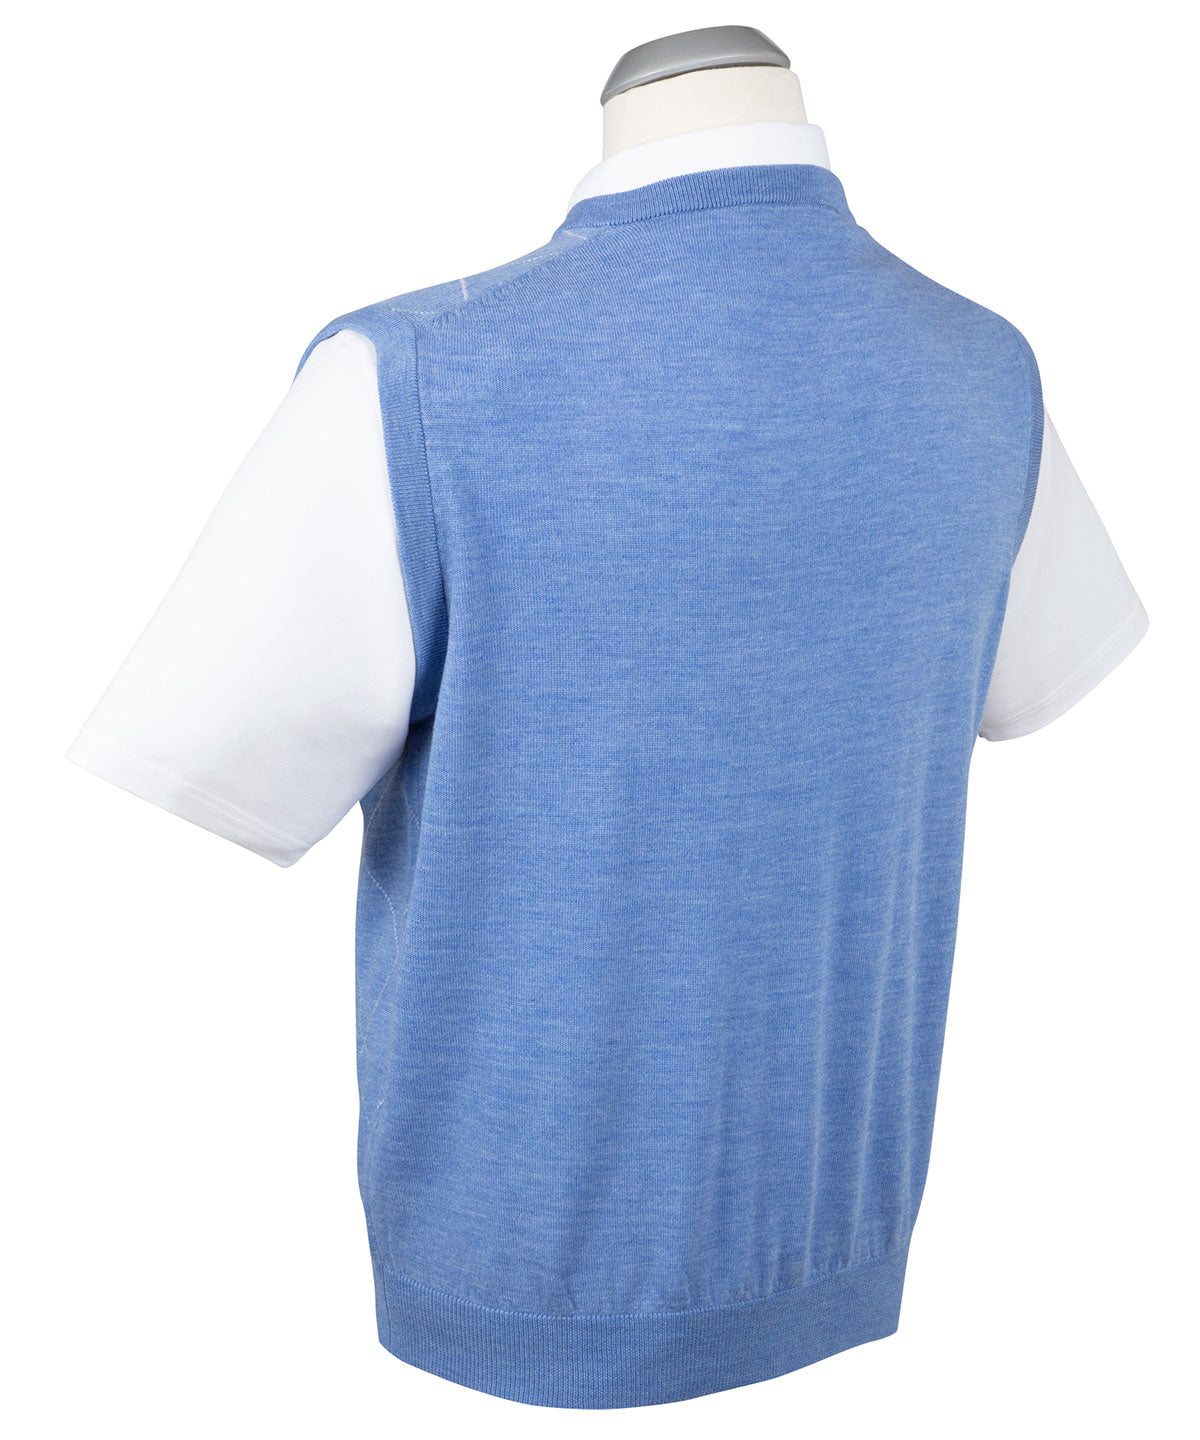 Vantage 7325 - Apex Compressible Quilted Vest $50.69 - T-Shirts